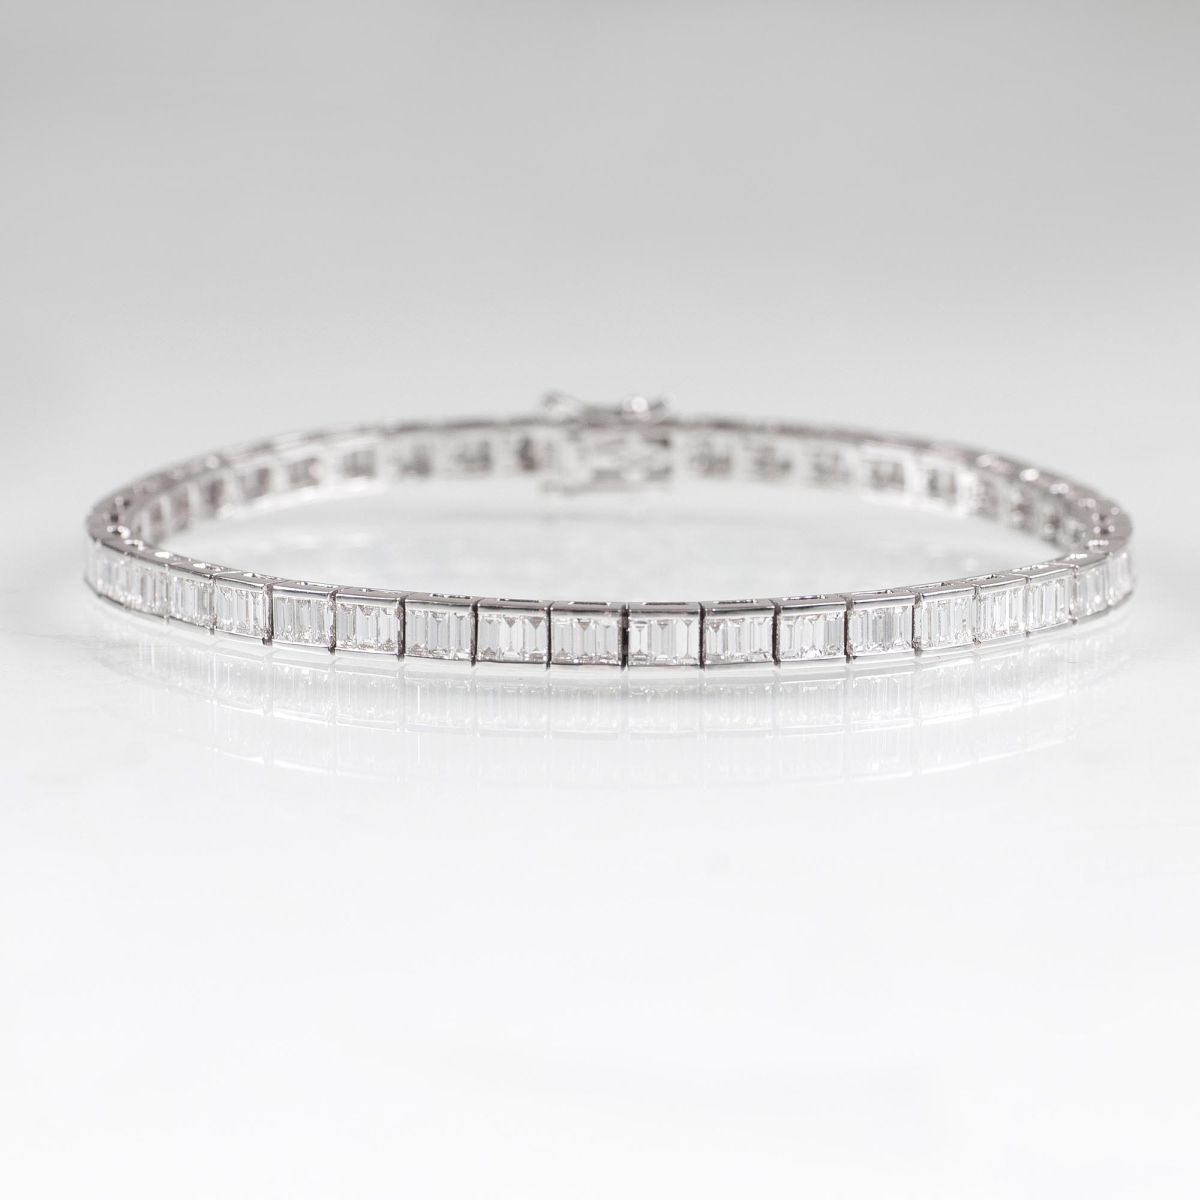 A fine white Diamond Bracelet - image 2